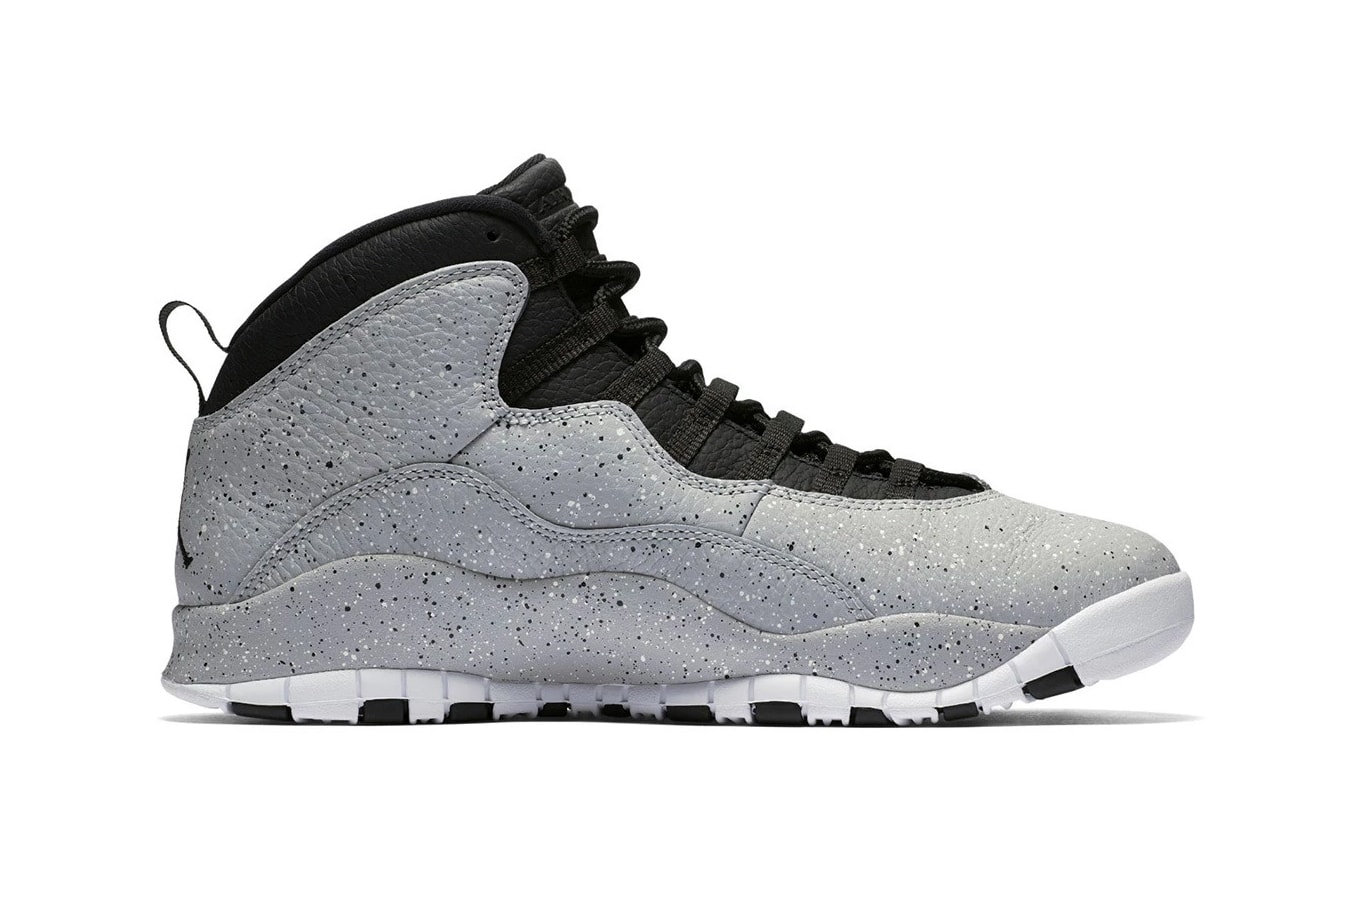 Air Jordan 10 Retro “Light Smoke” Release date jordan brand info drop sneaker footwear black white grey speckled Michael jordan